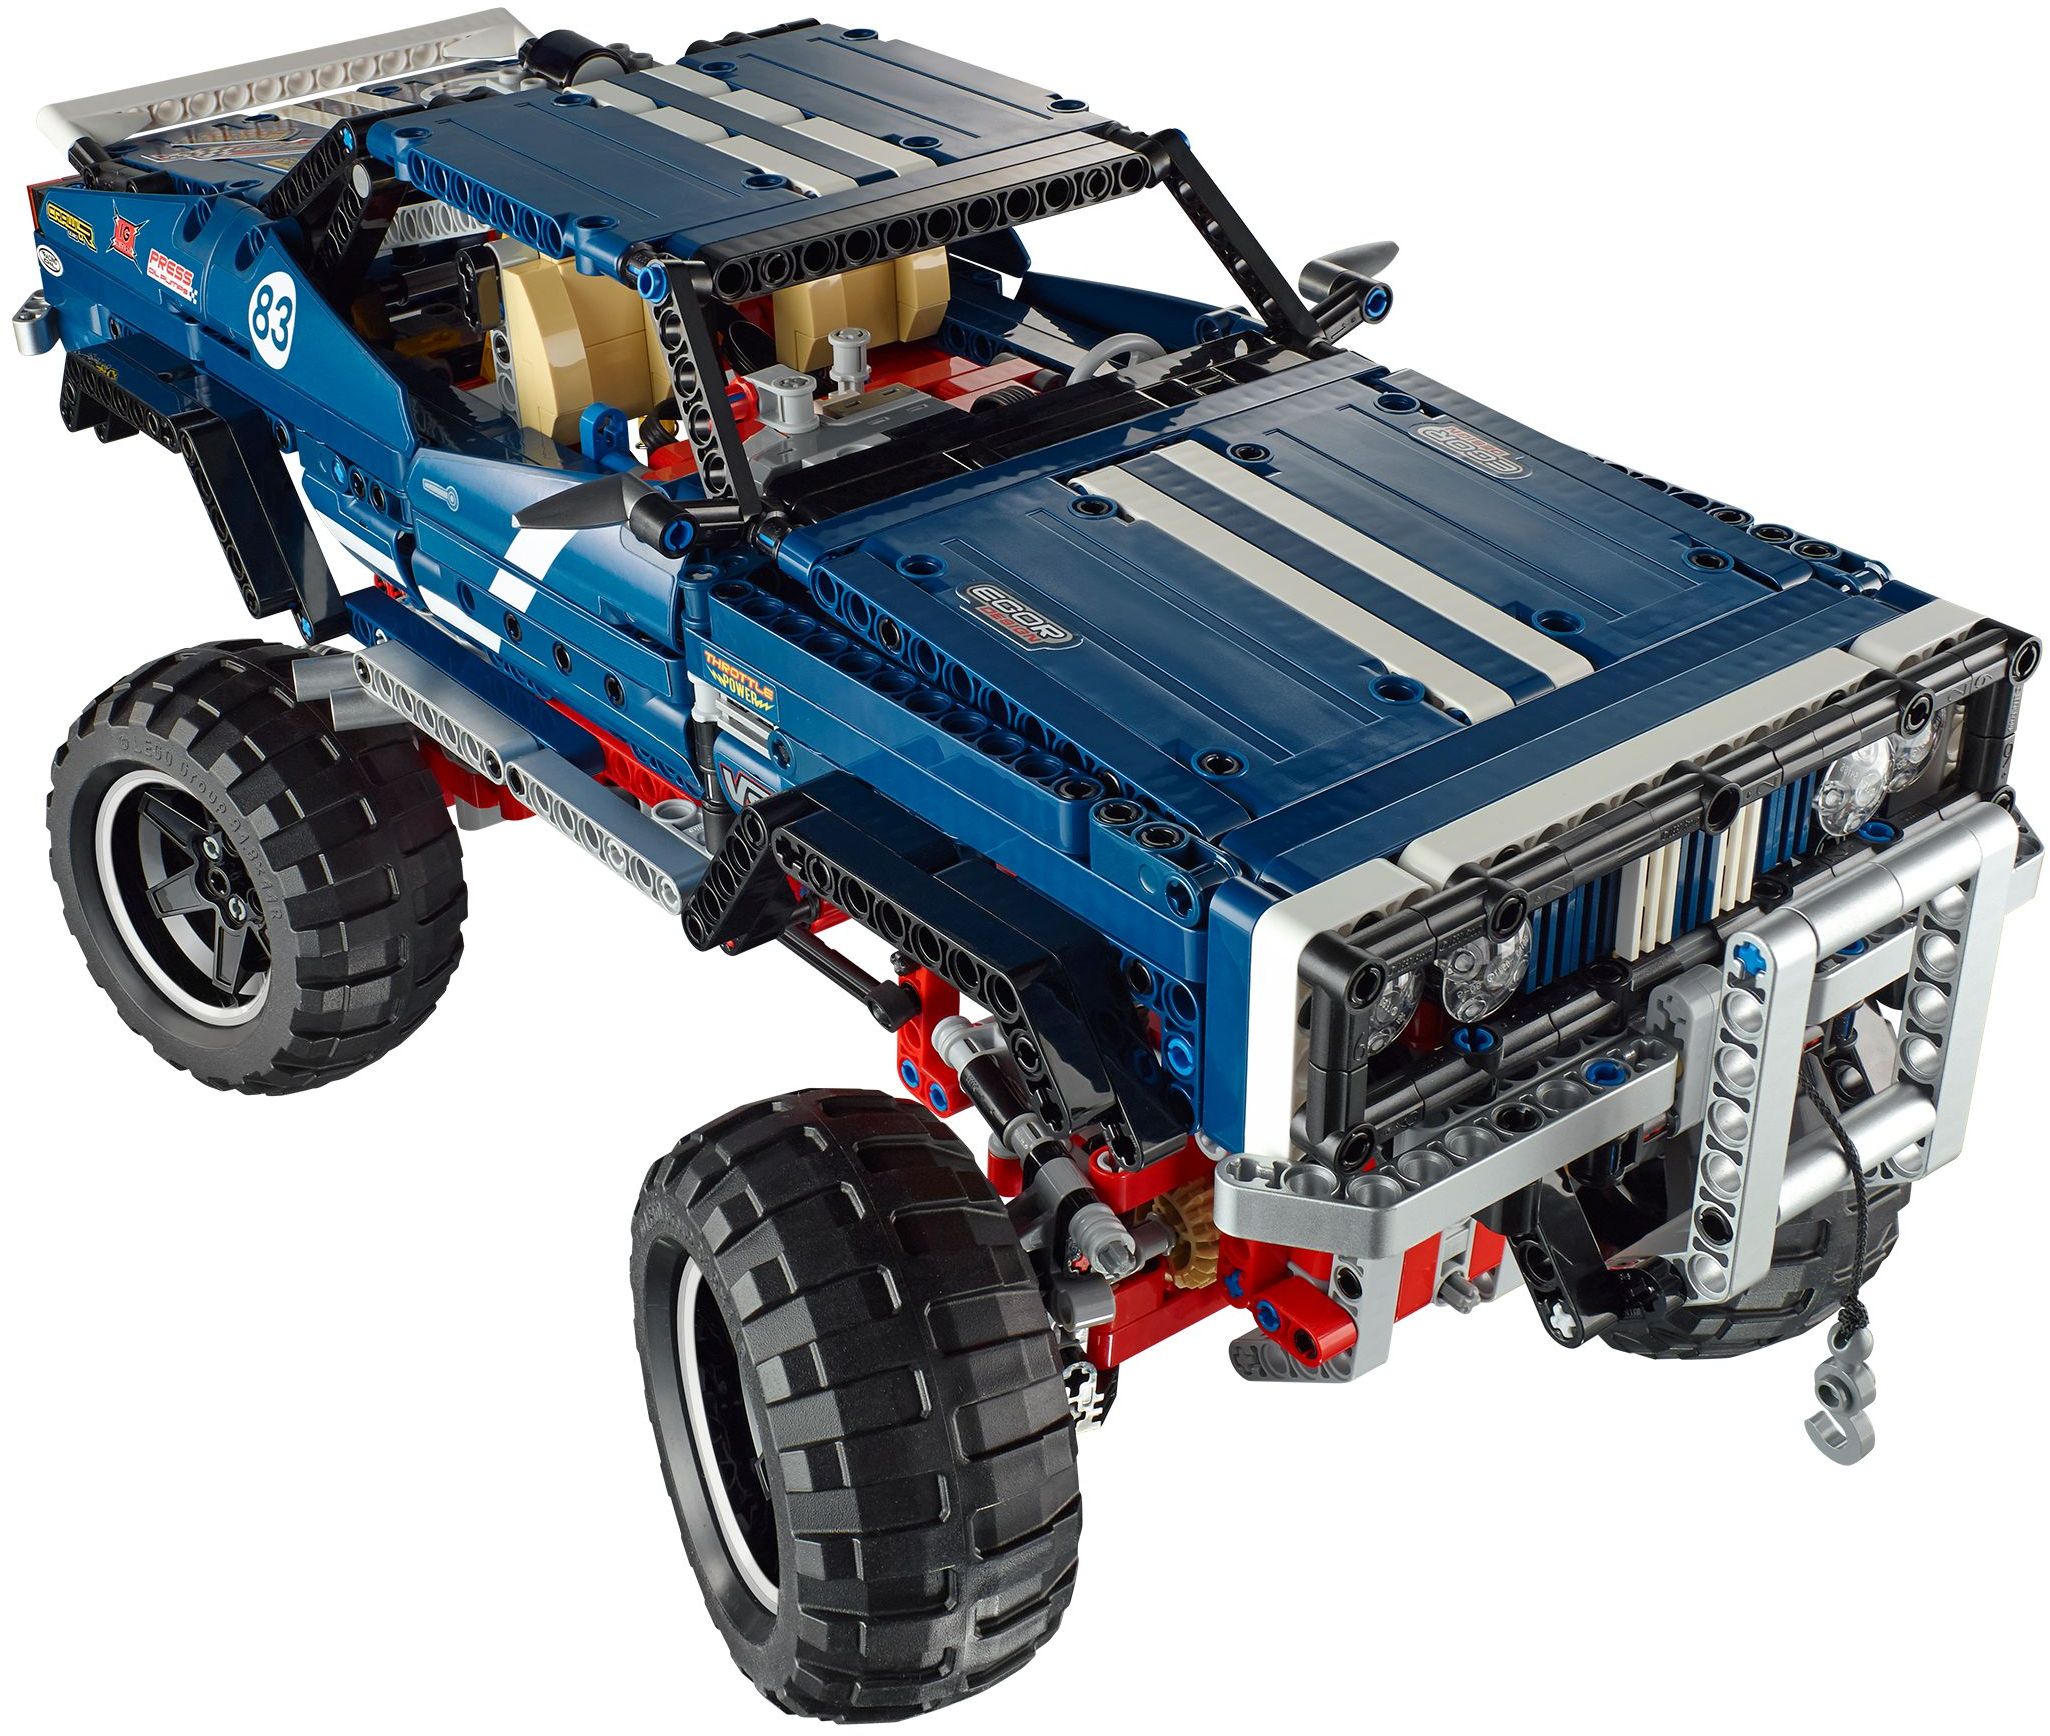 Technic | 2013 | Brickset: LEGO set 